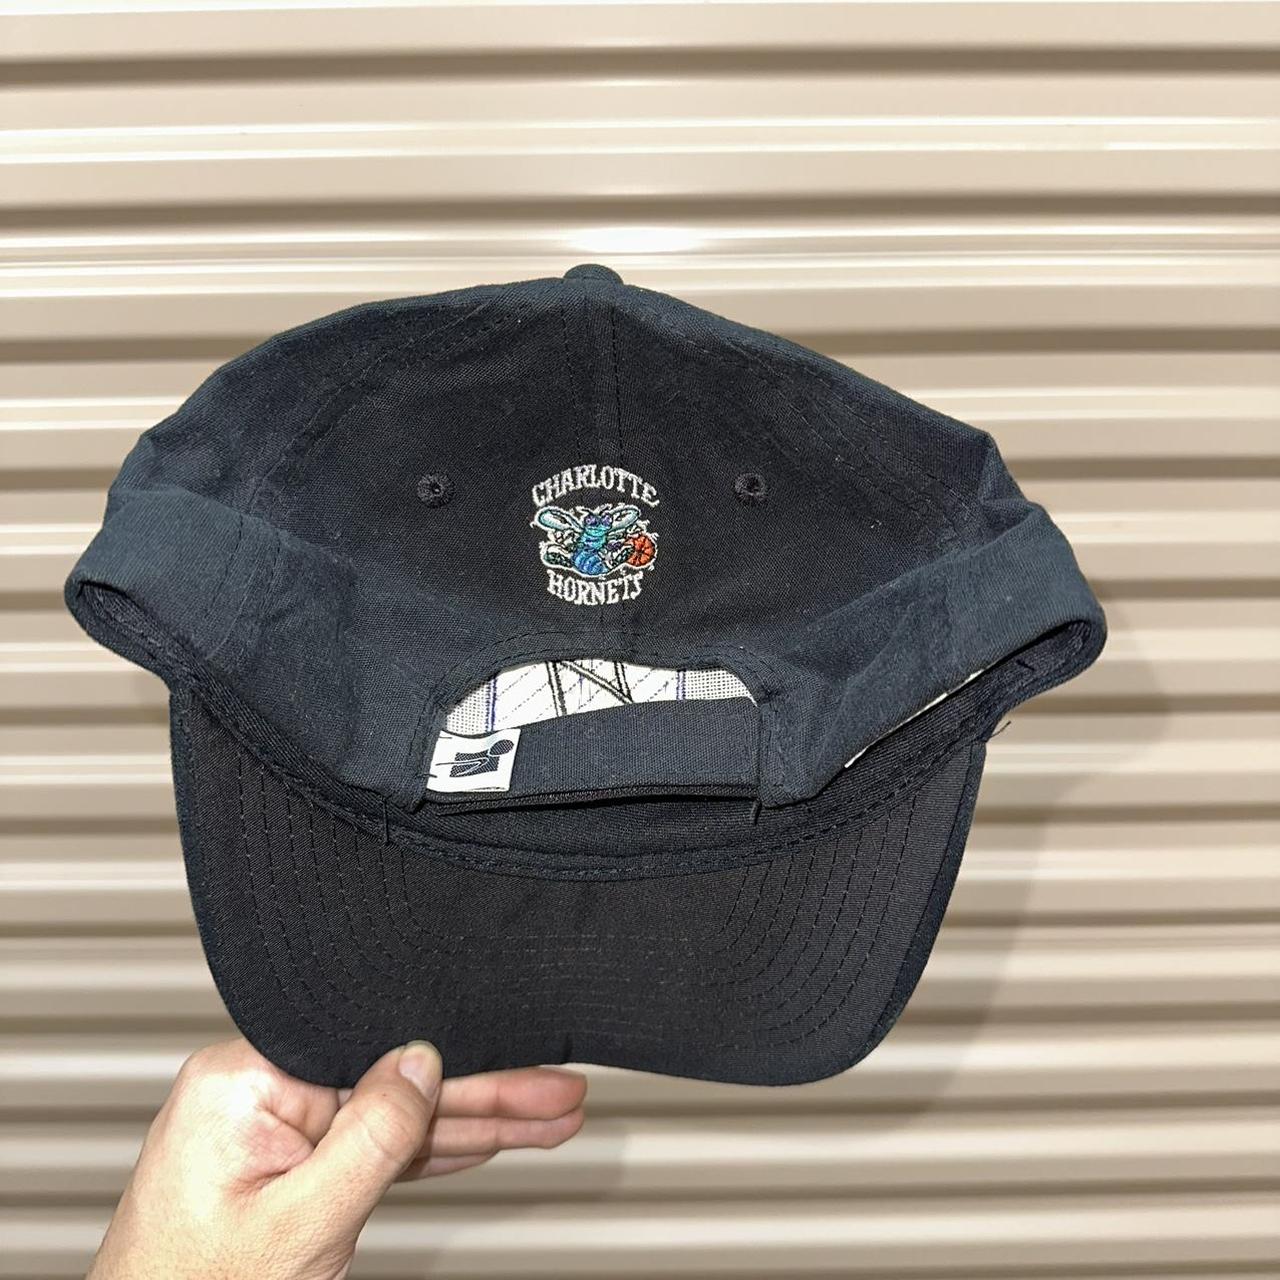 Sports Specialties Charlotte Hornets hat, vintage, - Depop